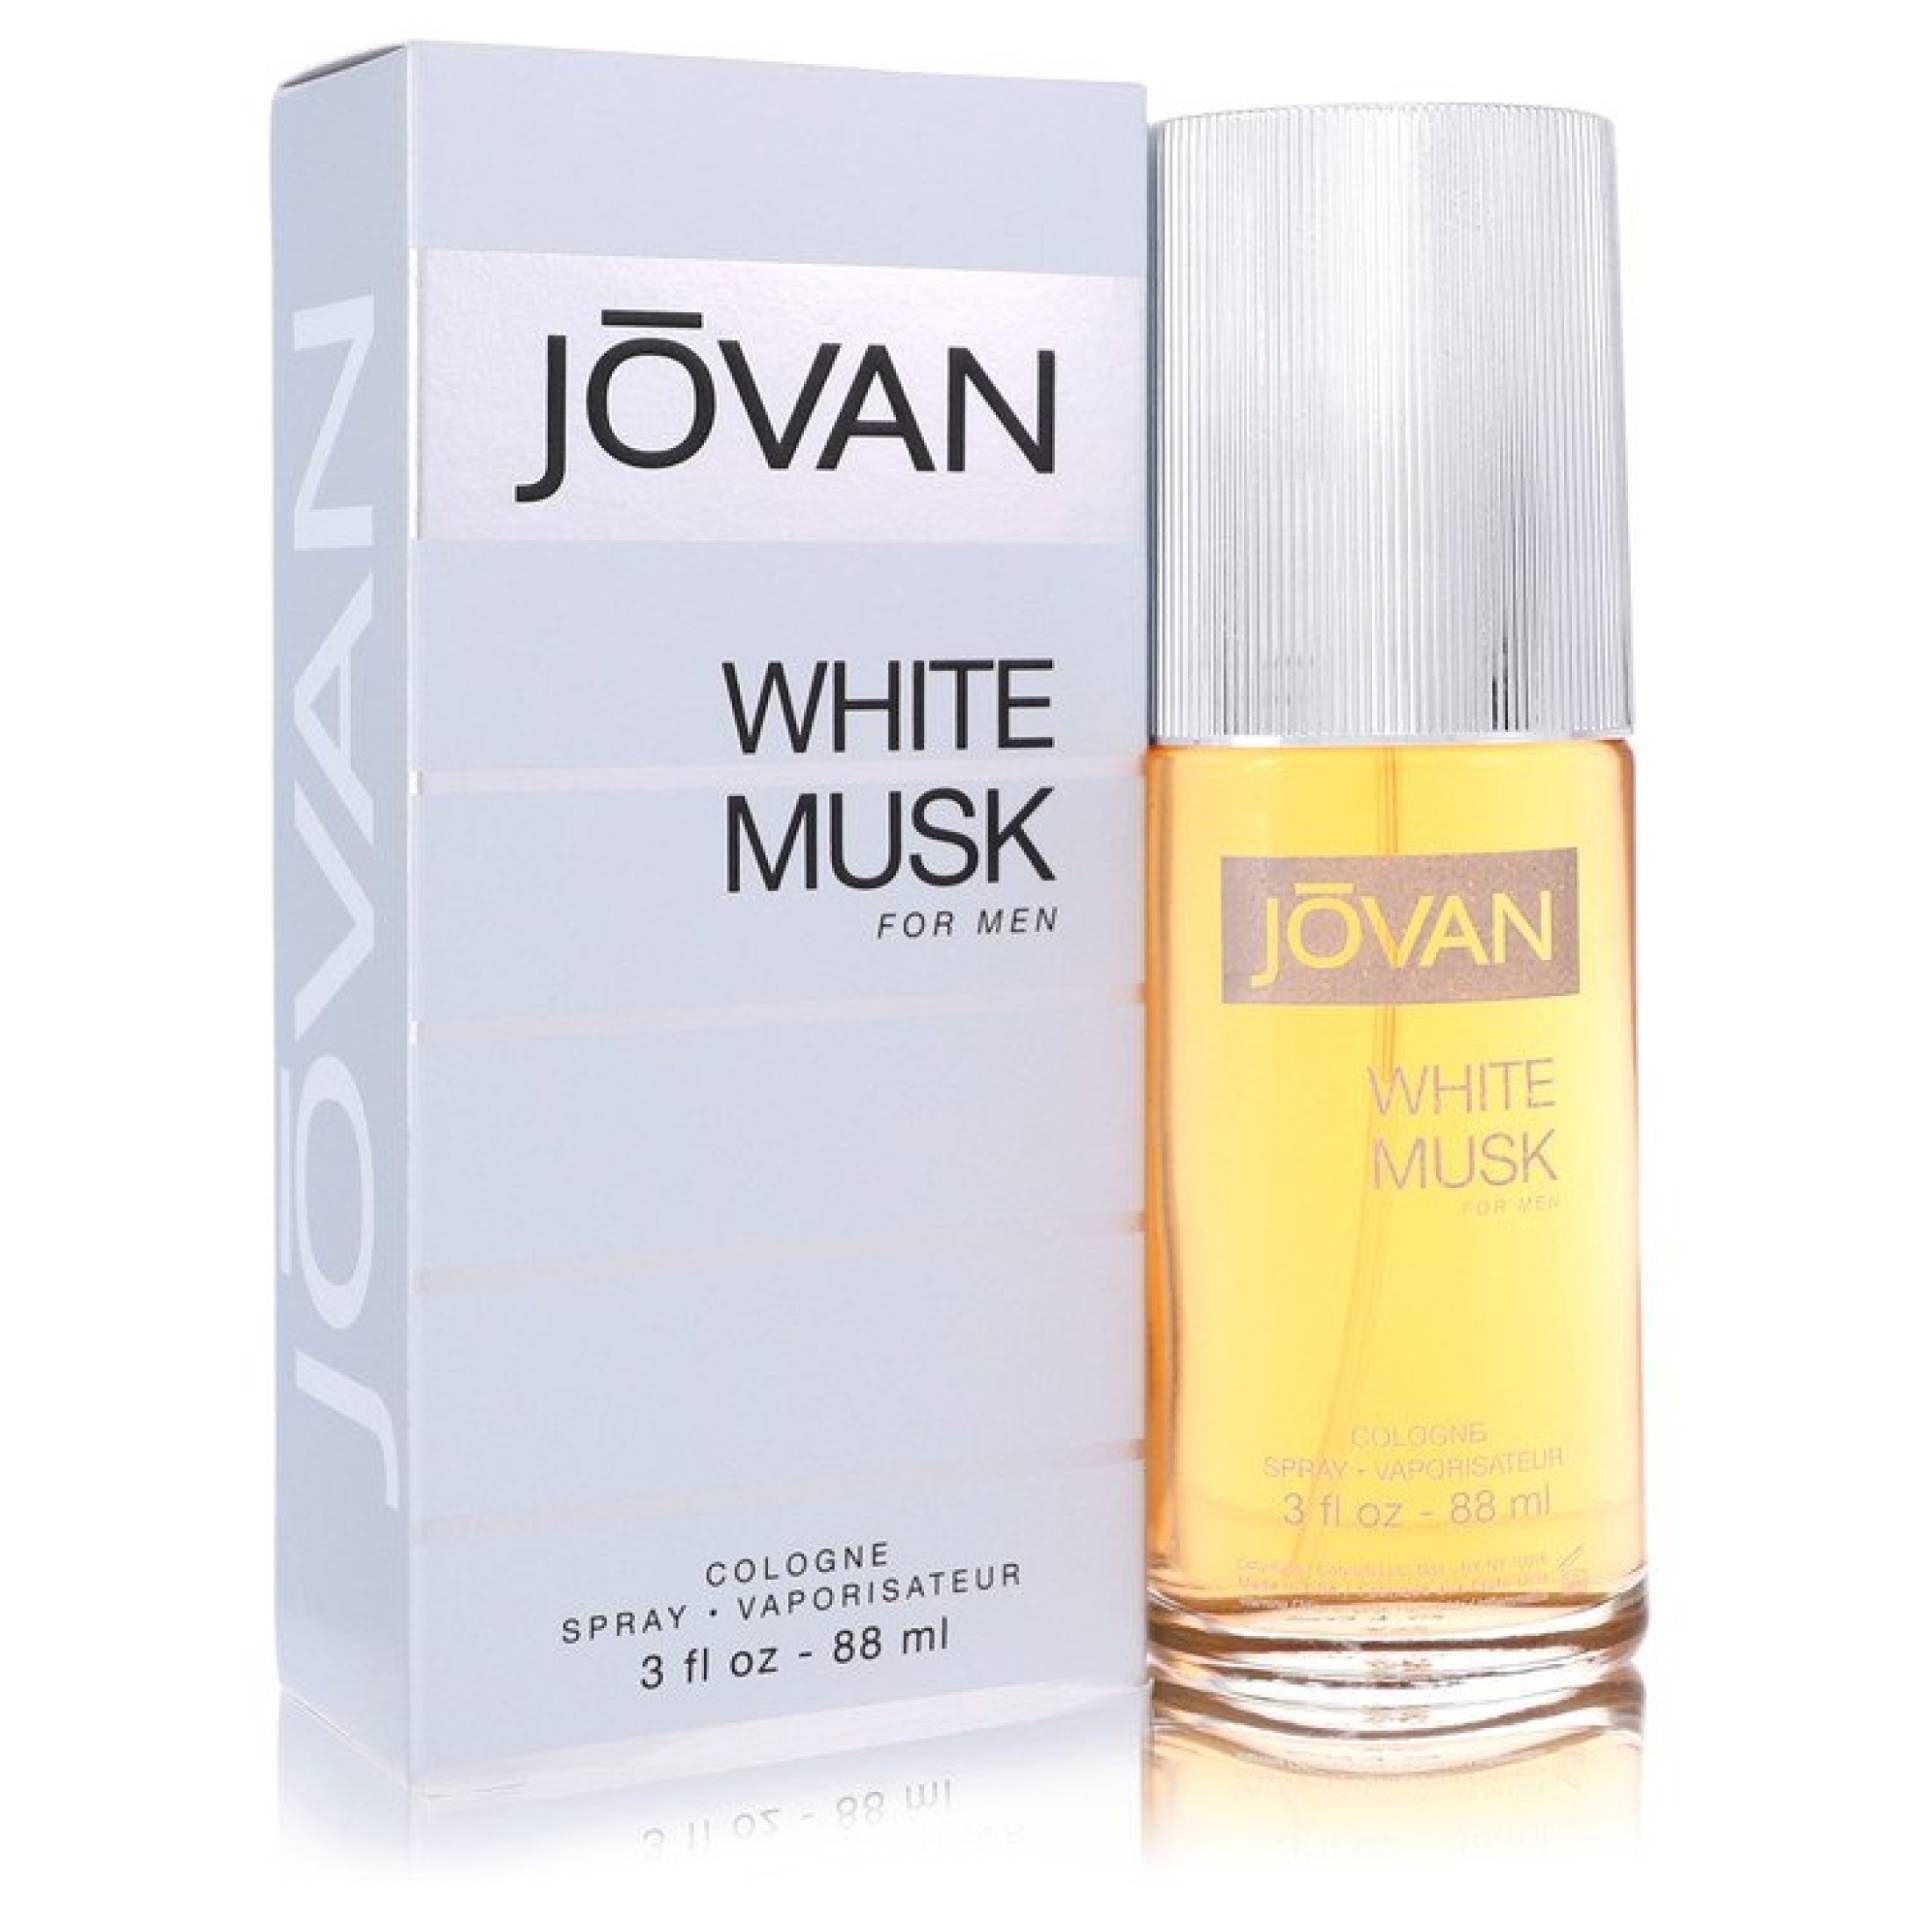 Jovan JOVAN WHITE MUSK Eau De Cologne Spray 90 ml von Jovan